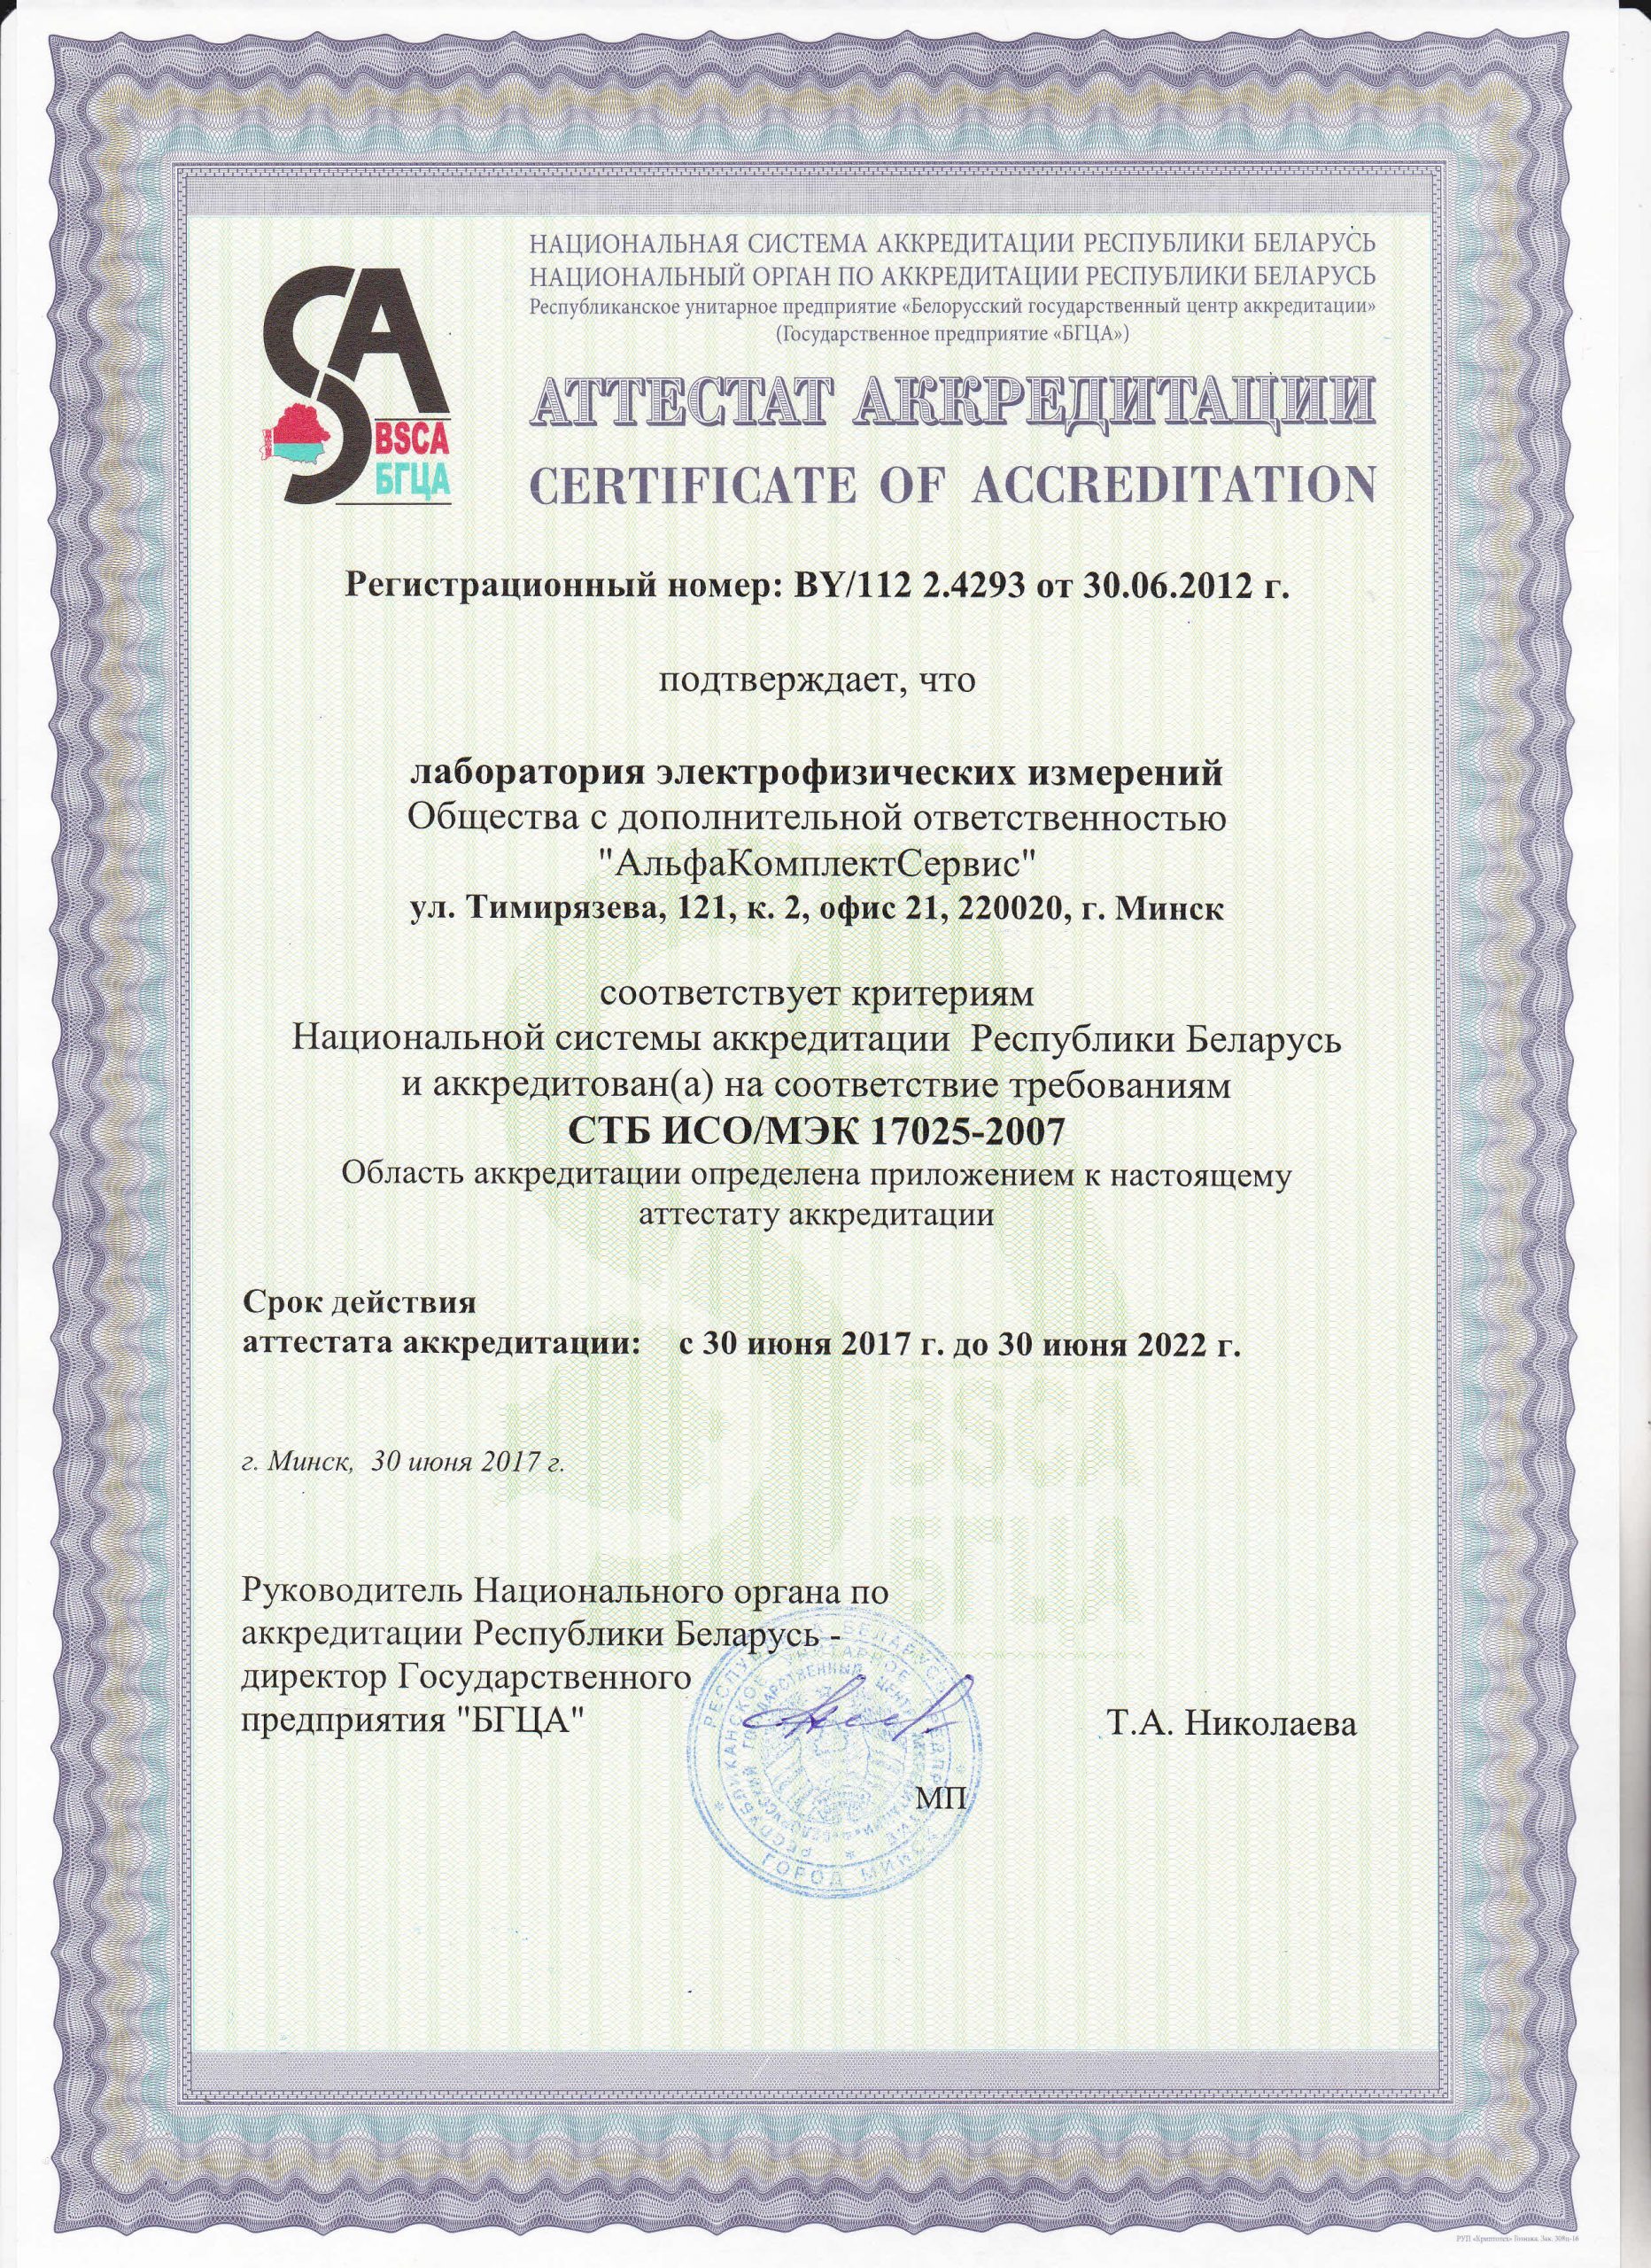 Аттестат (сертификат) аккредитации - СТБ ИСО МЭК 17025